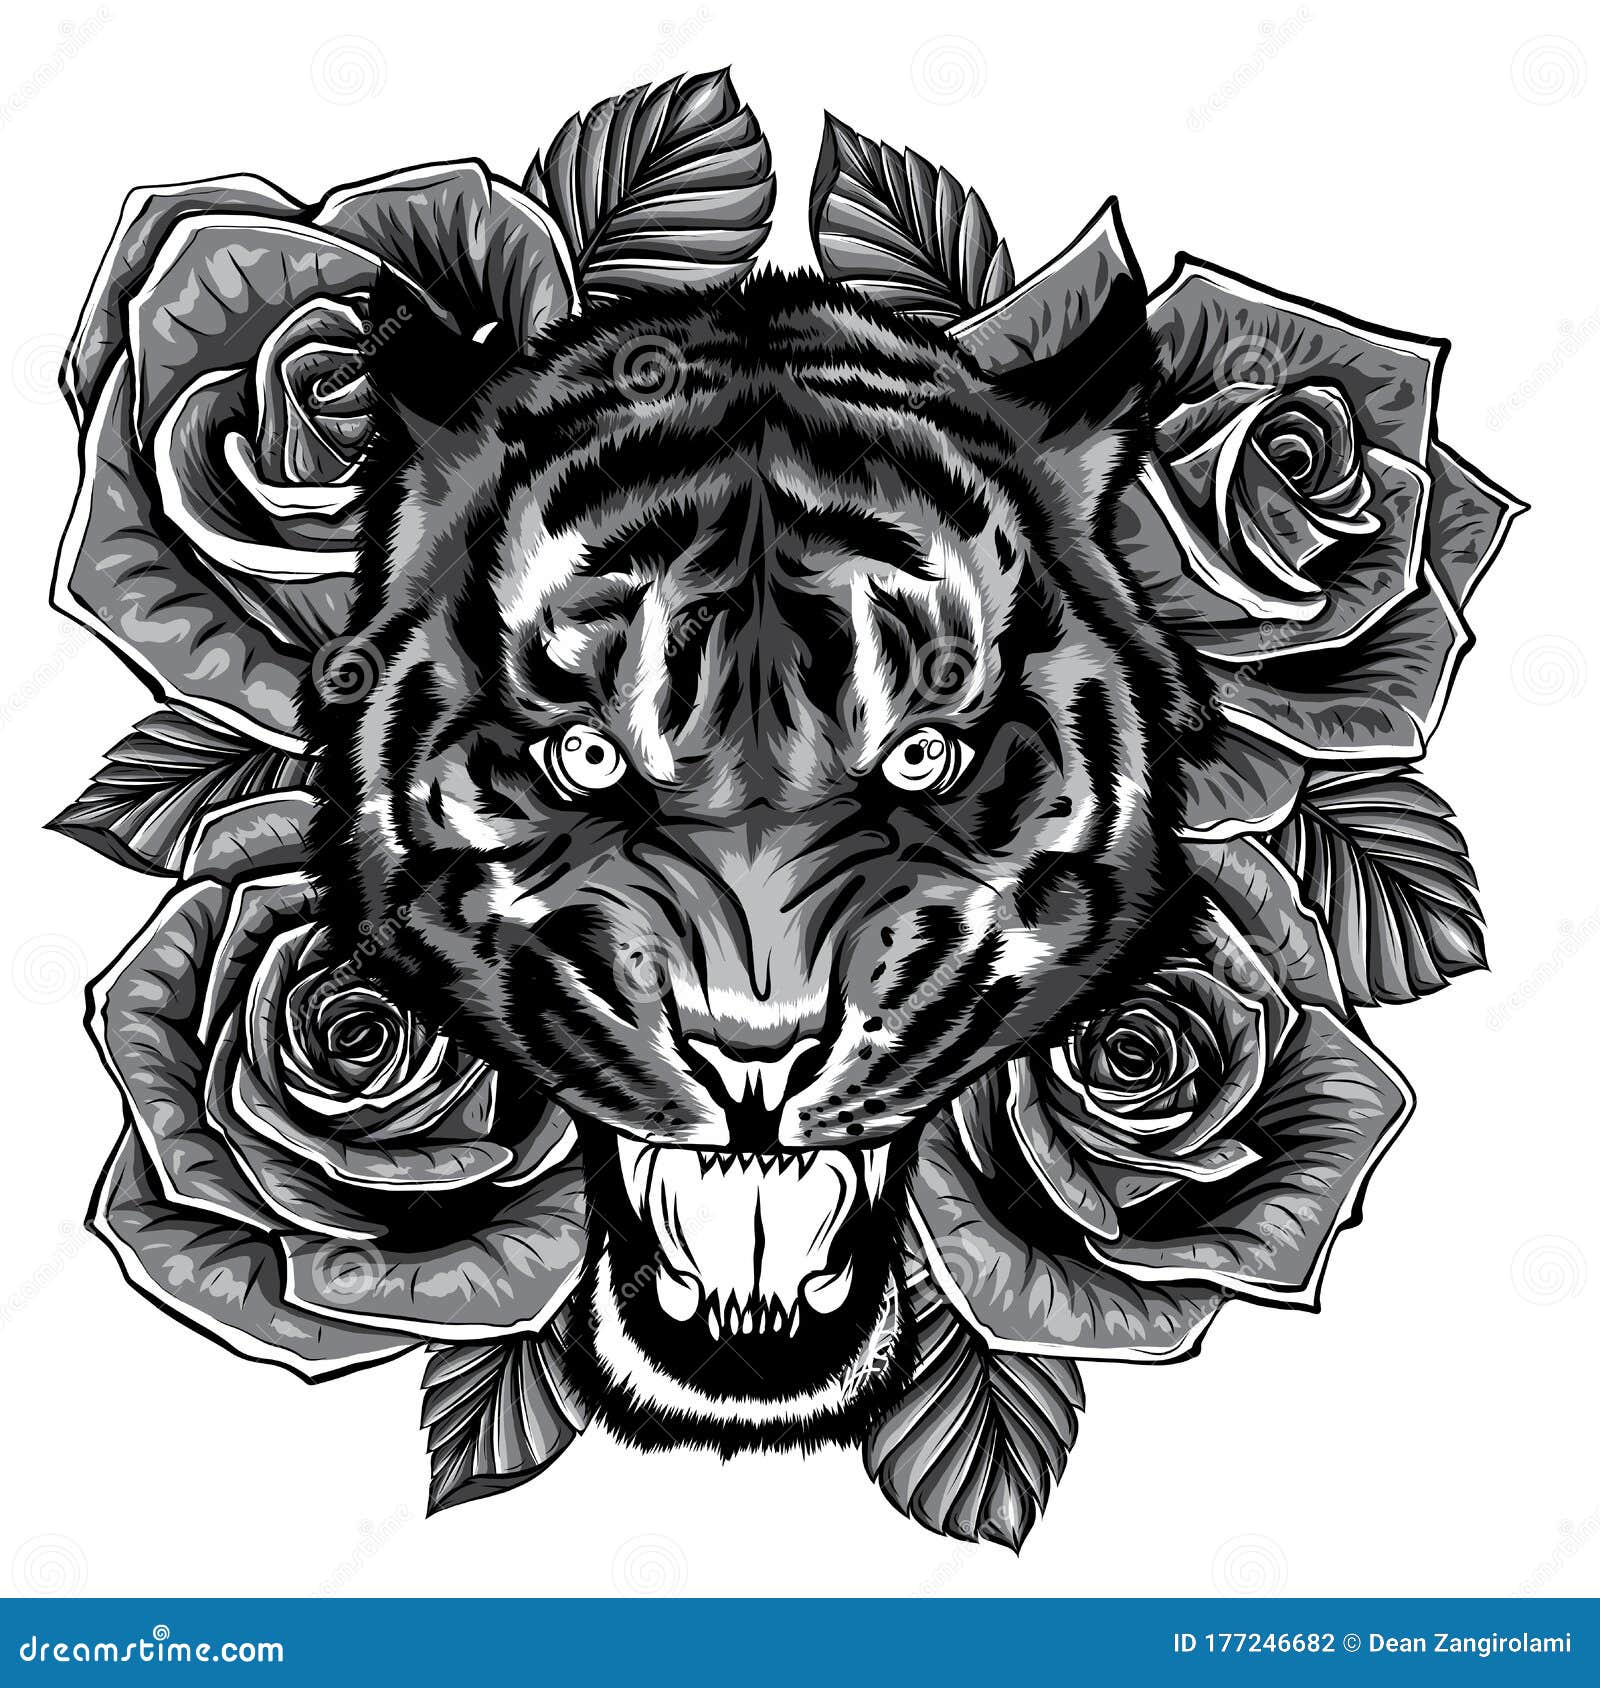 Vector Illustration of Roaring Tiger Head and Roses Tattoo Stock Vector -  Illustration of animal, drawing: 177246682